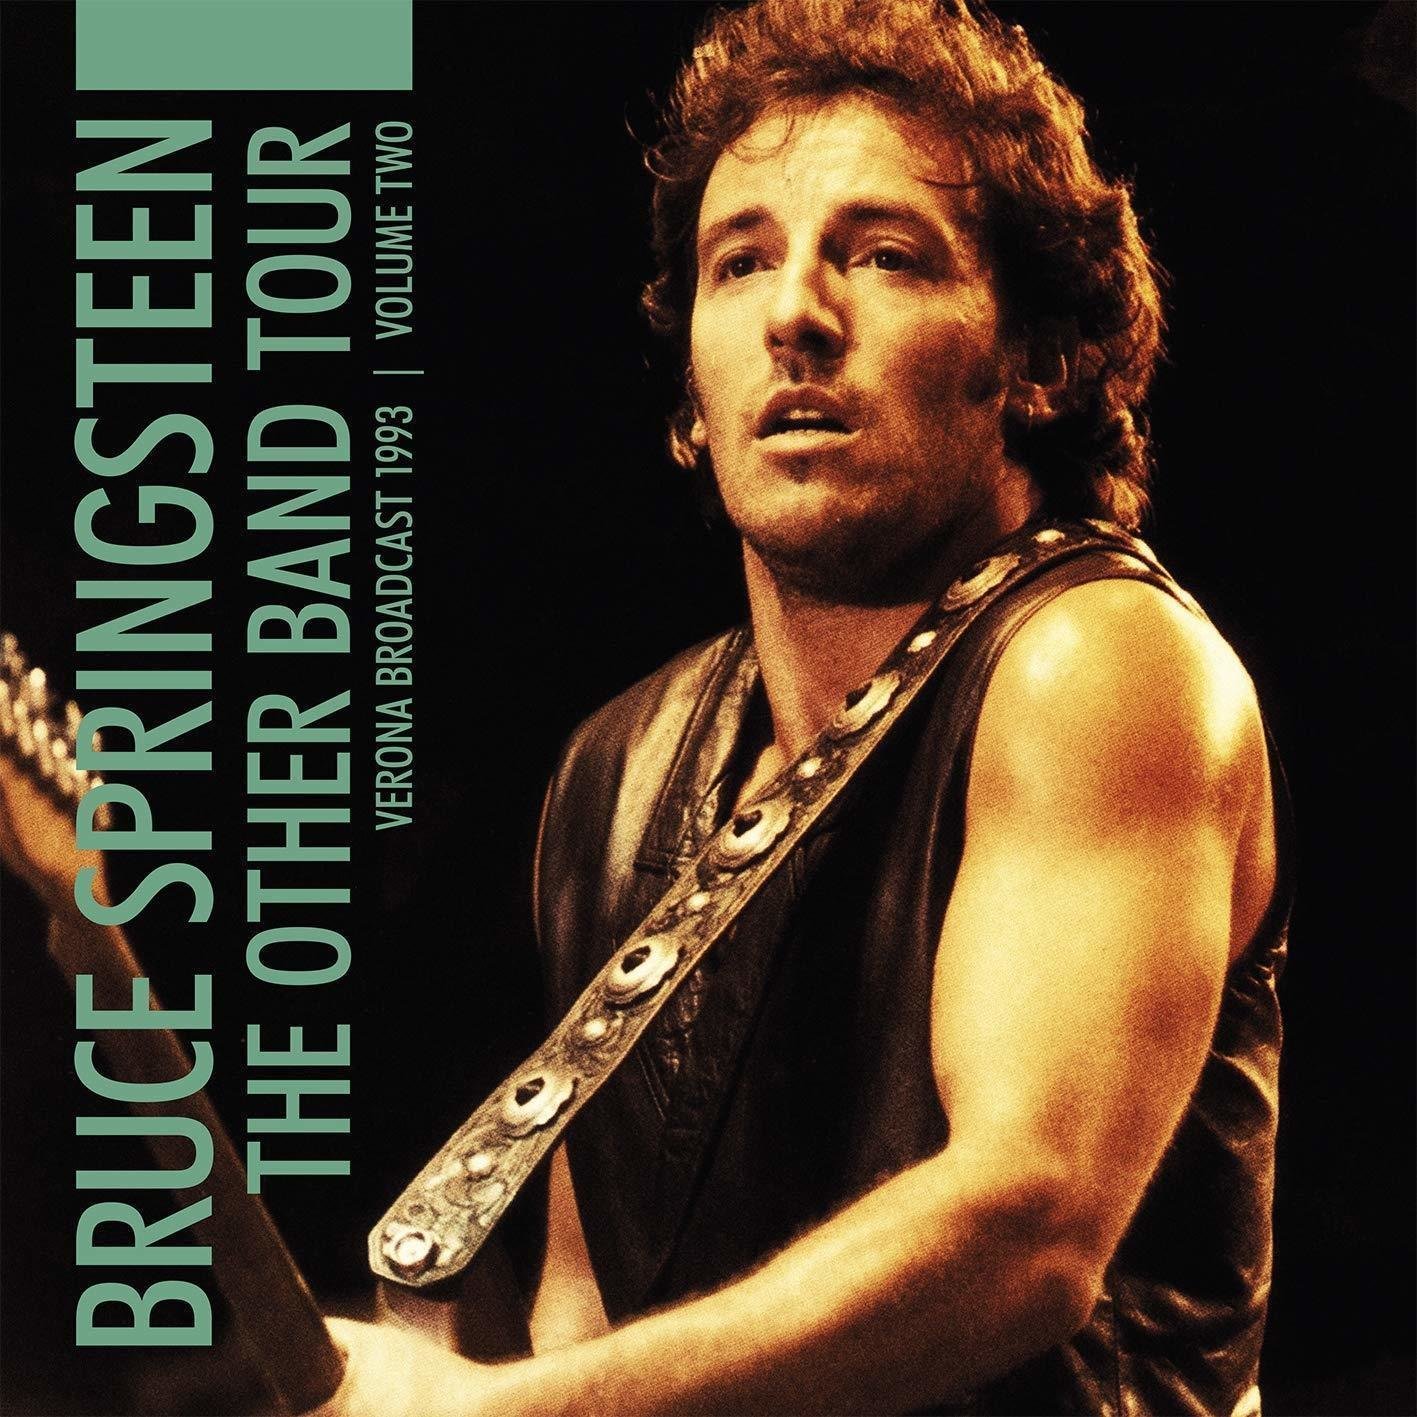 Schallplatte Bruce Springsteen - The Other Band Tour - Verona Broadcast 1993 - Volume Two (2 LP)